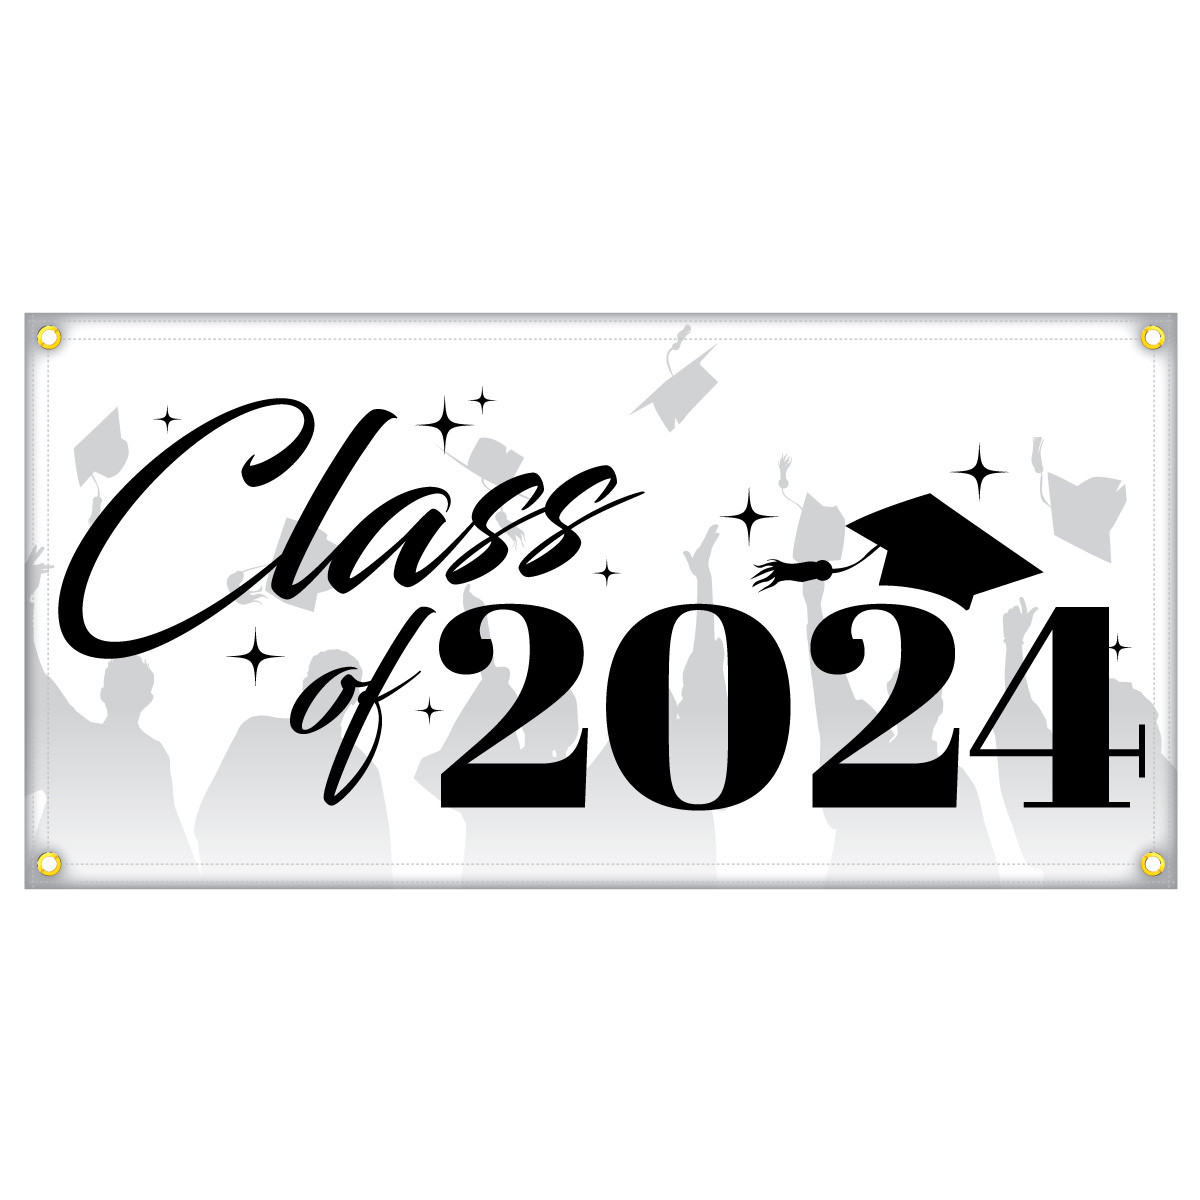 Hem & Grommet Digital (2' x 4') Banner - Class of 2024